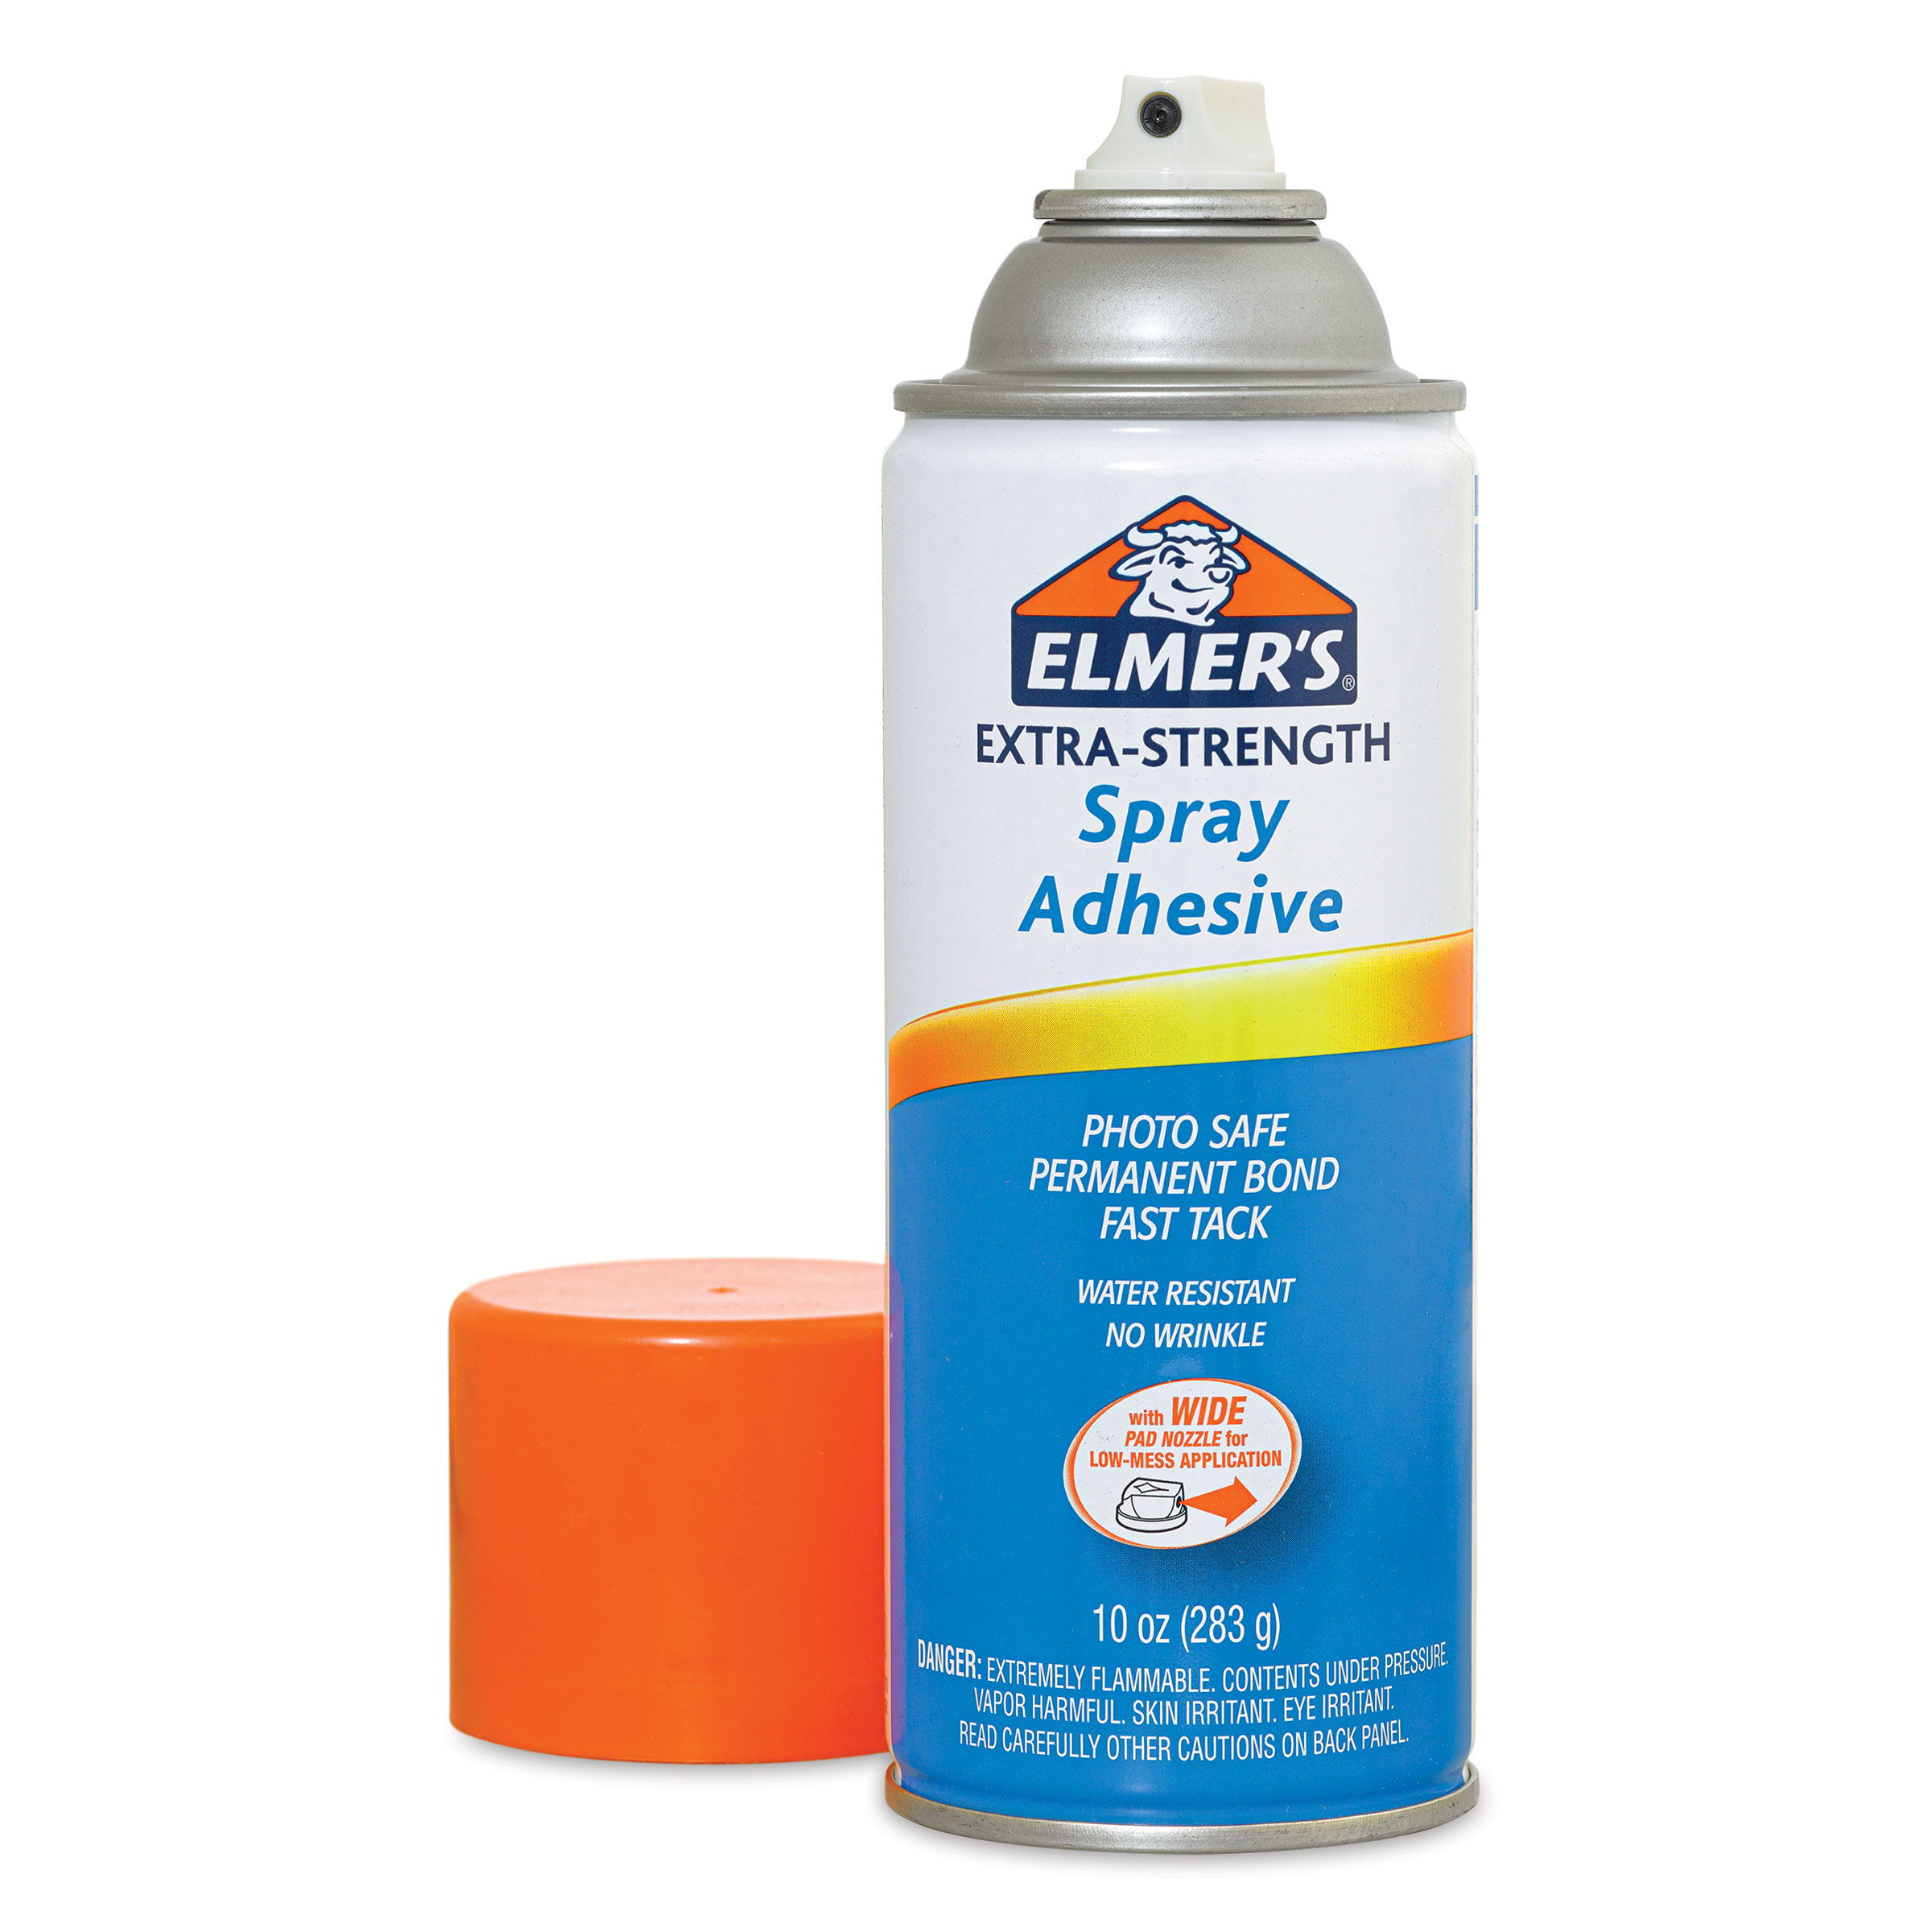 Elmers Extra Strength Spray Adhesive